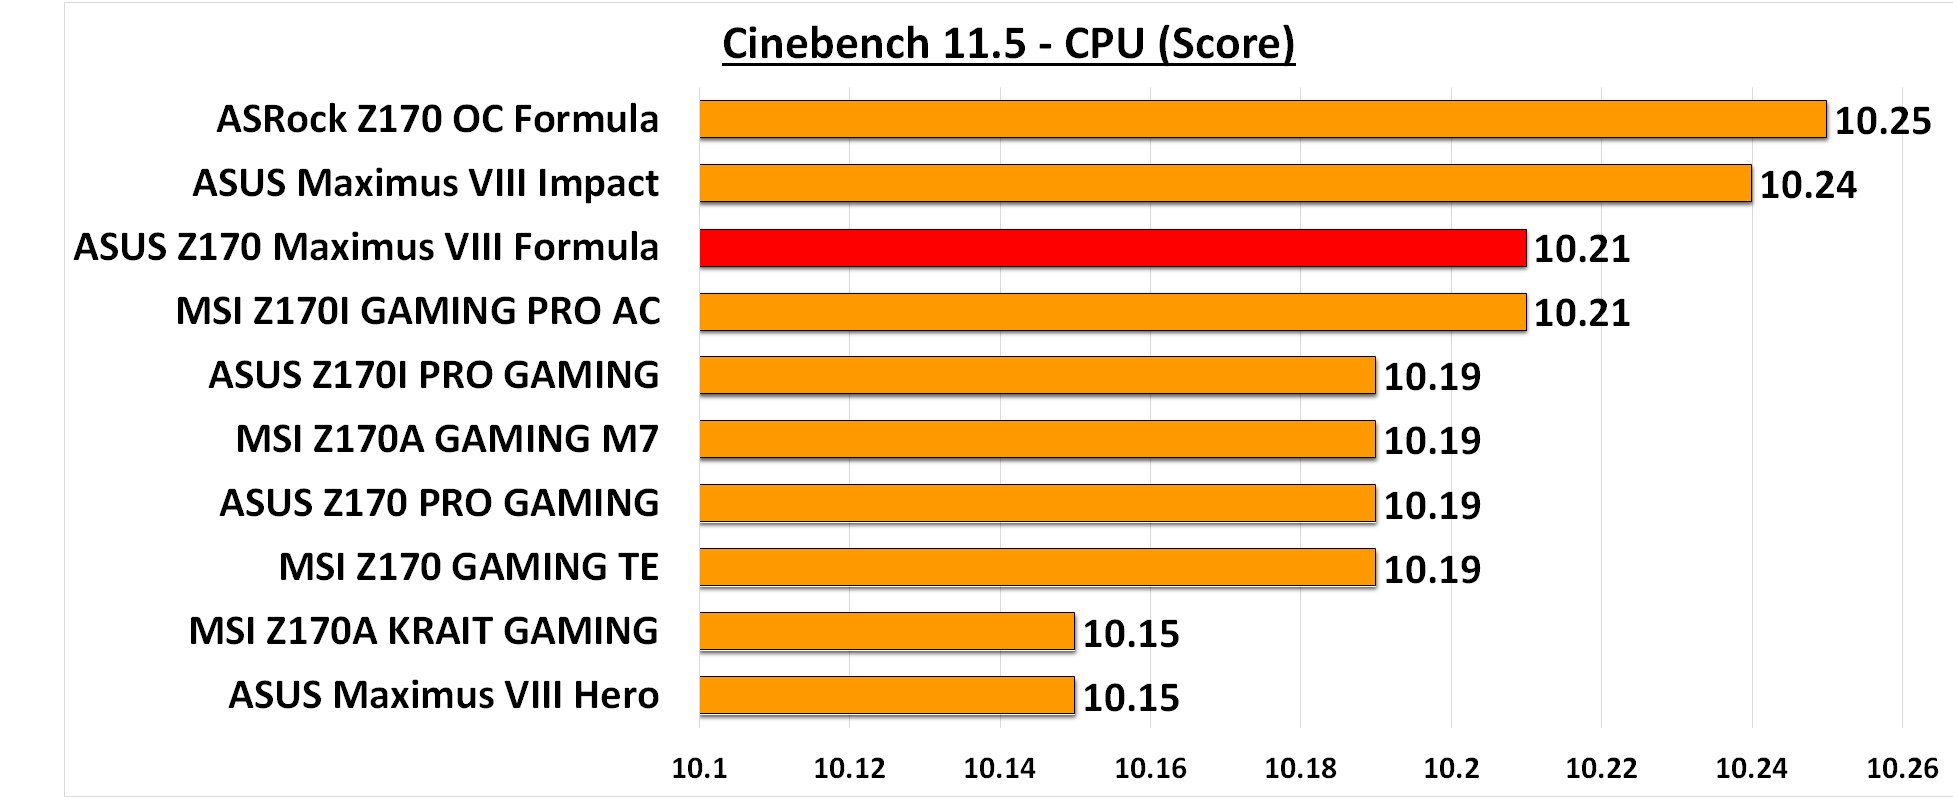 Cinebench 11.5 CPU